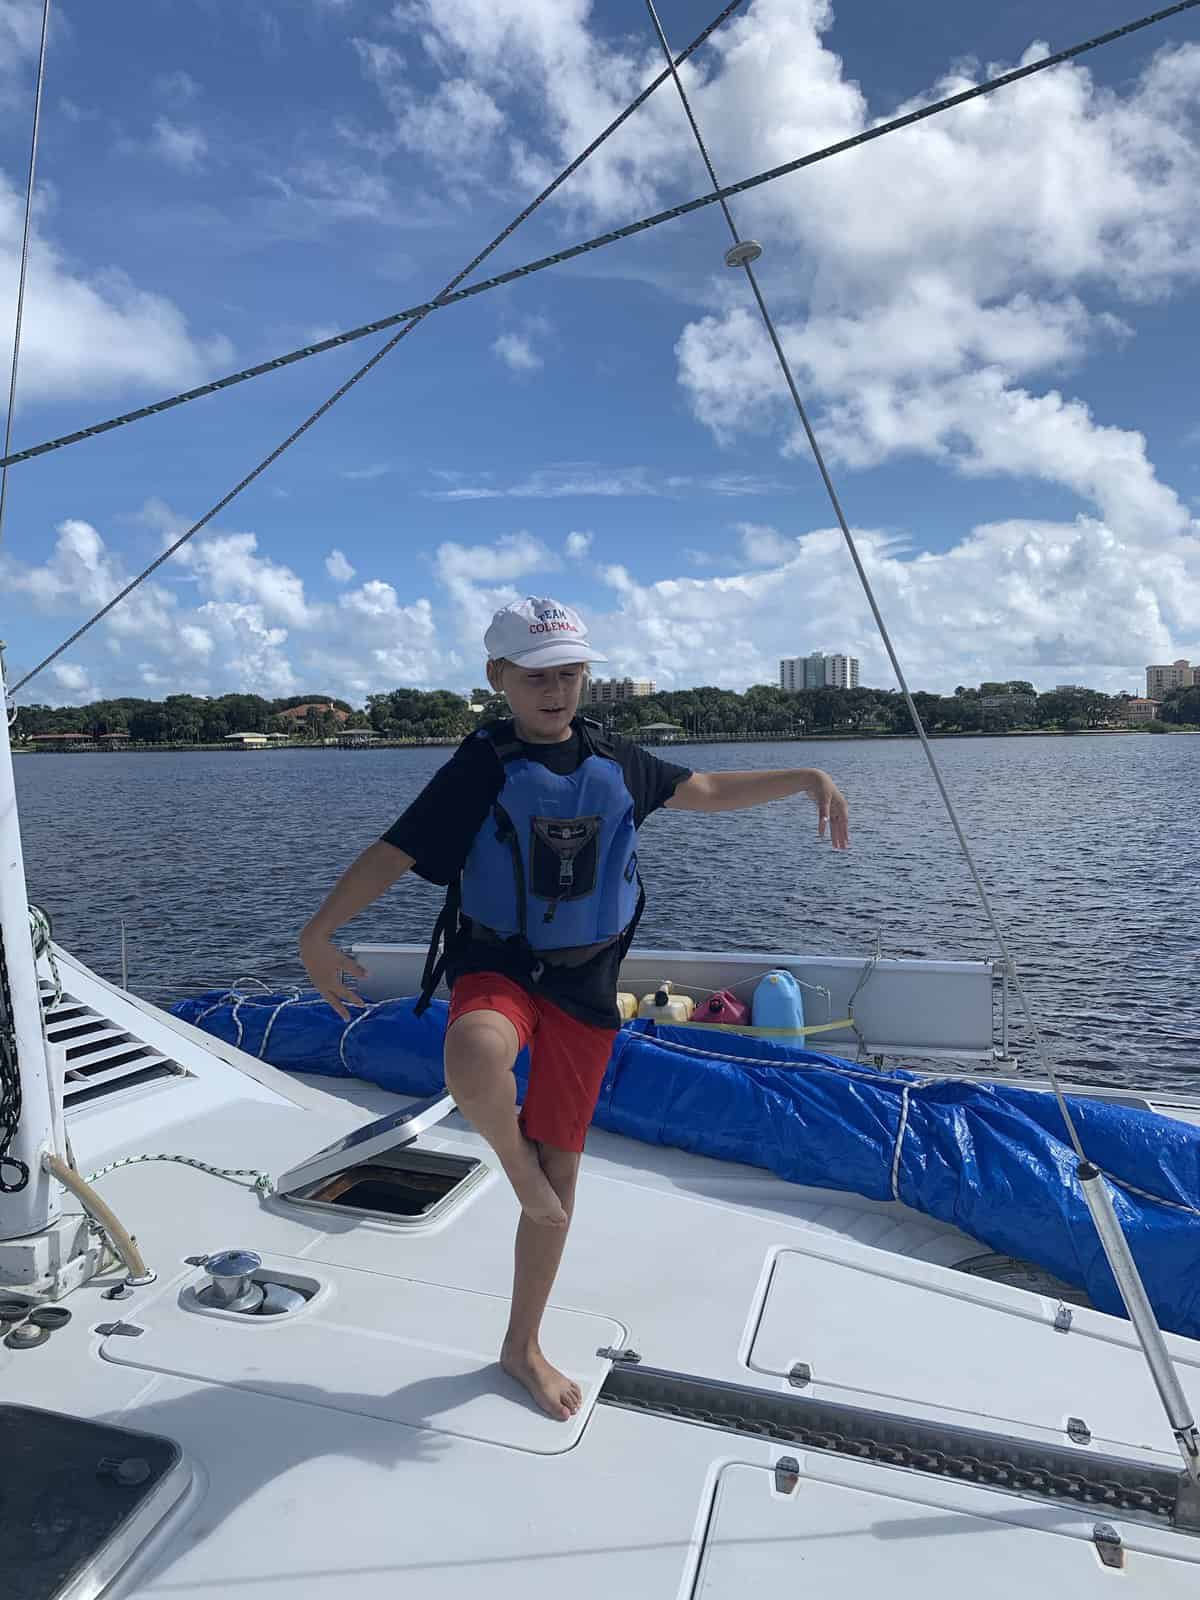 a boy balancing on one foot, on a catamaran